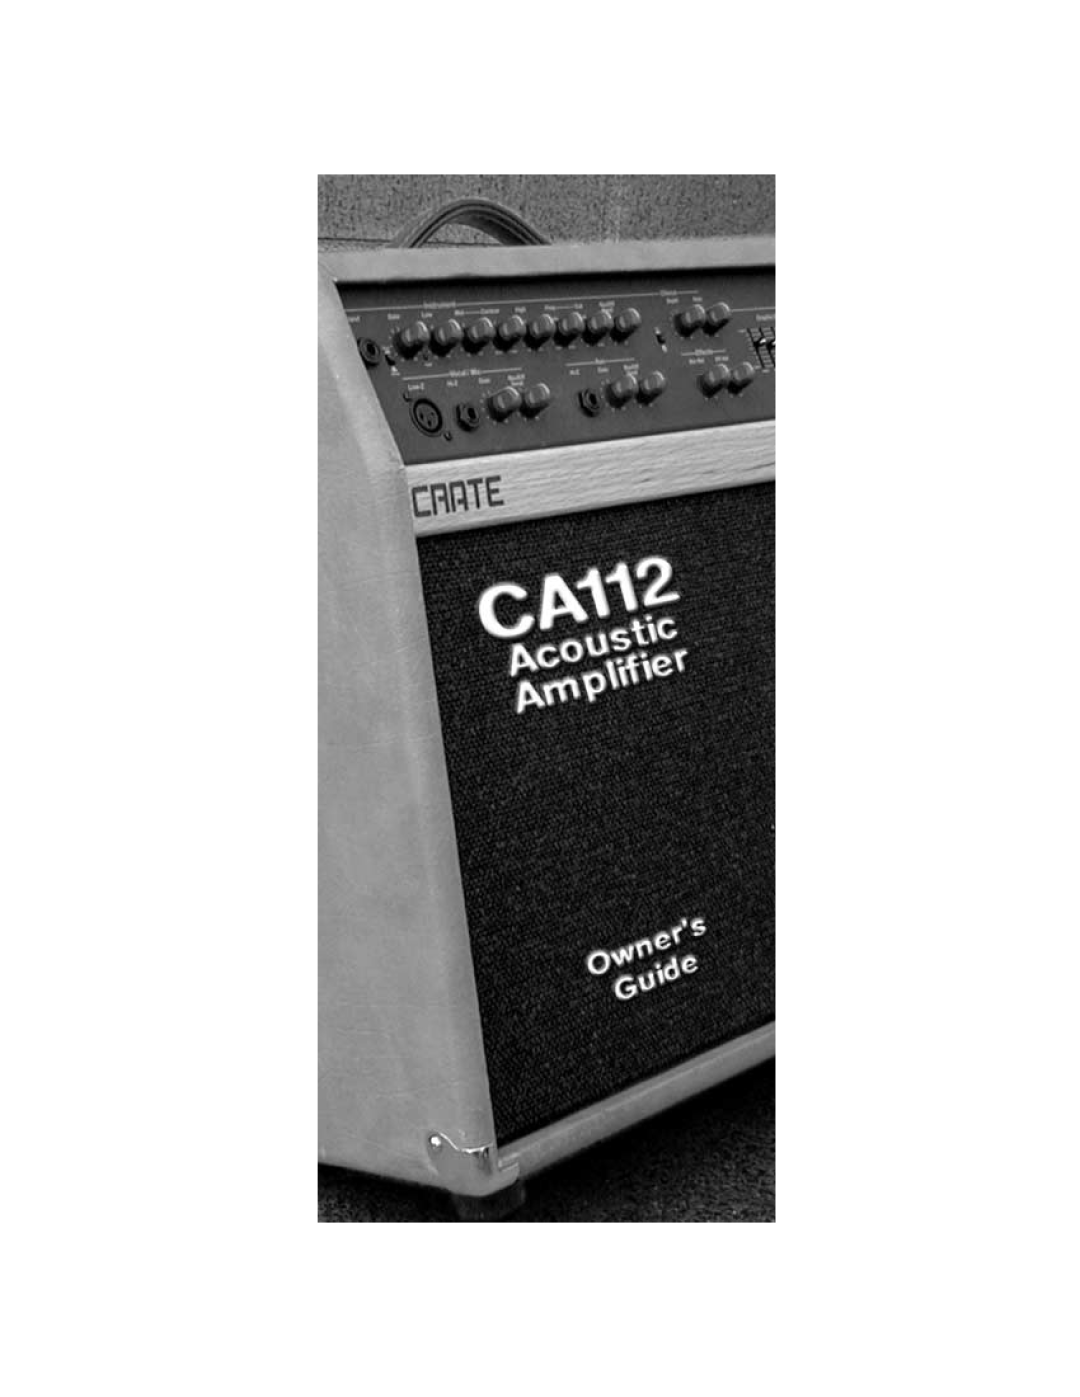 Crate Amplifiers CA112 manual 